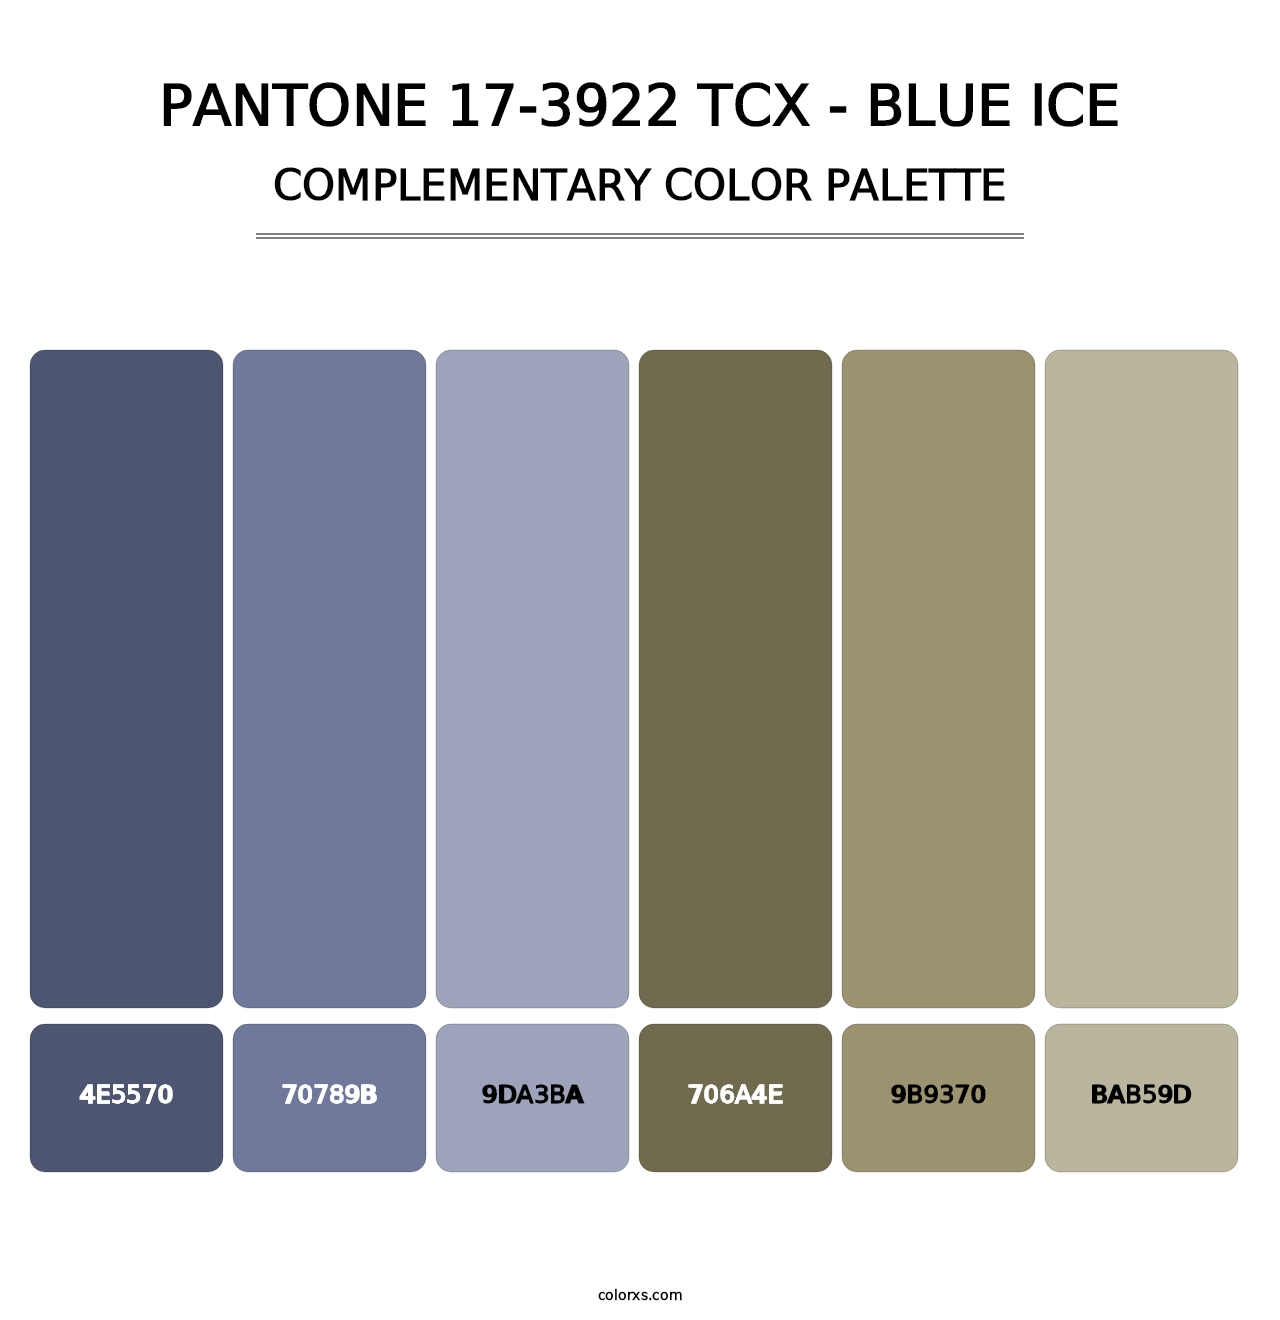 PANTONE 17-3922 TCX - Blue Ice - Complementary Color Palette